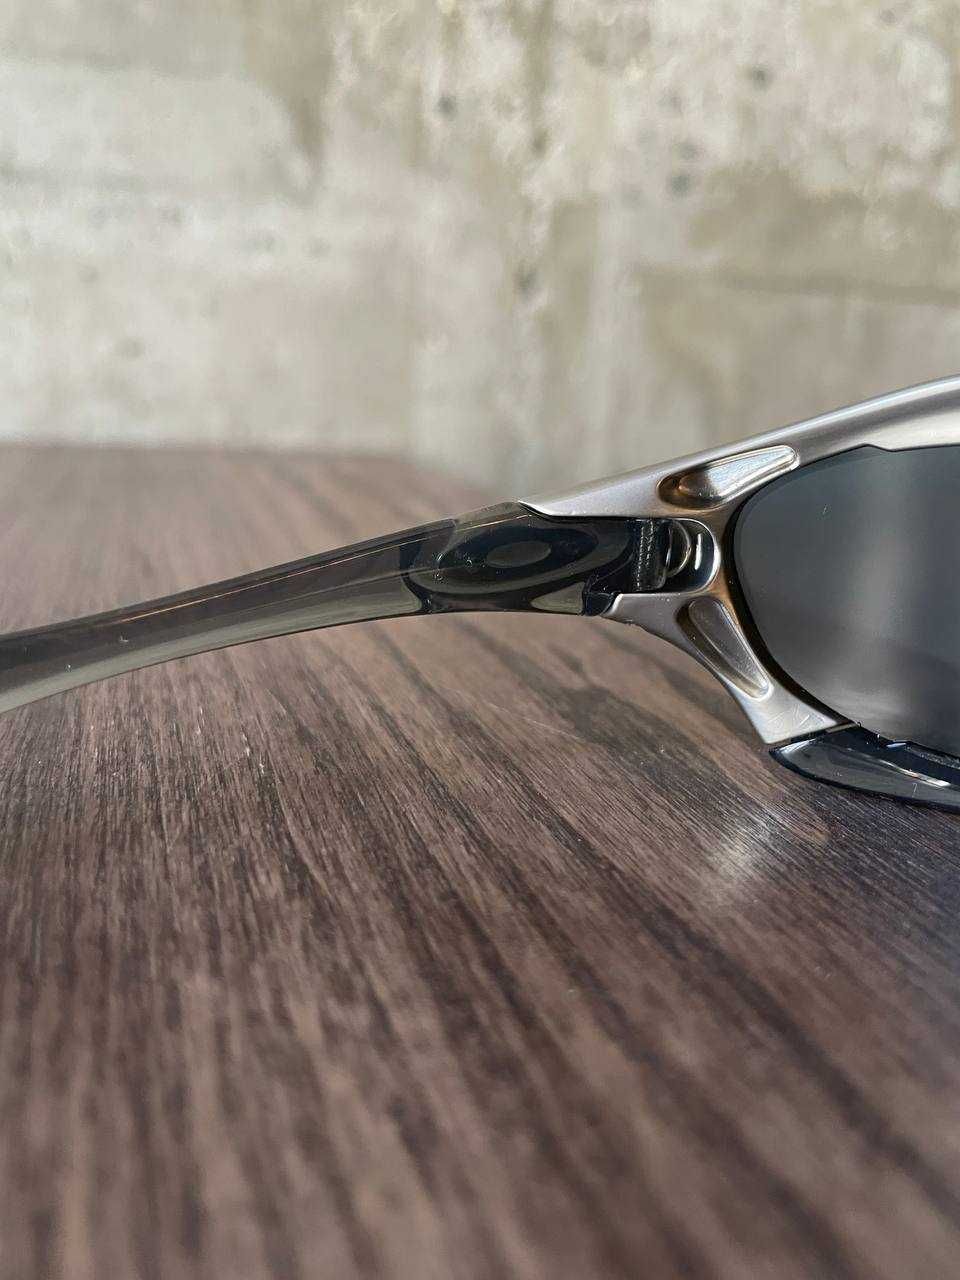 Солнцезащитные очки Oakley Black Prizm. Made in USA